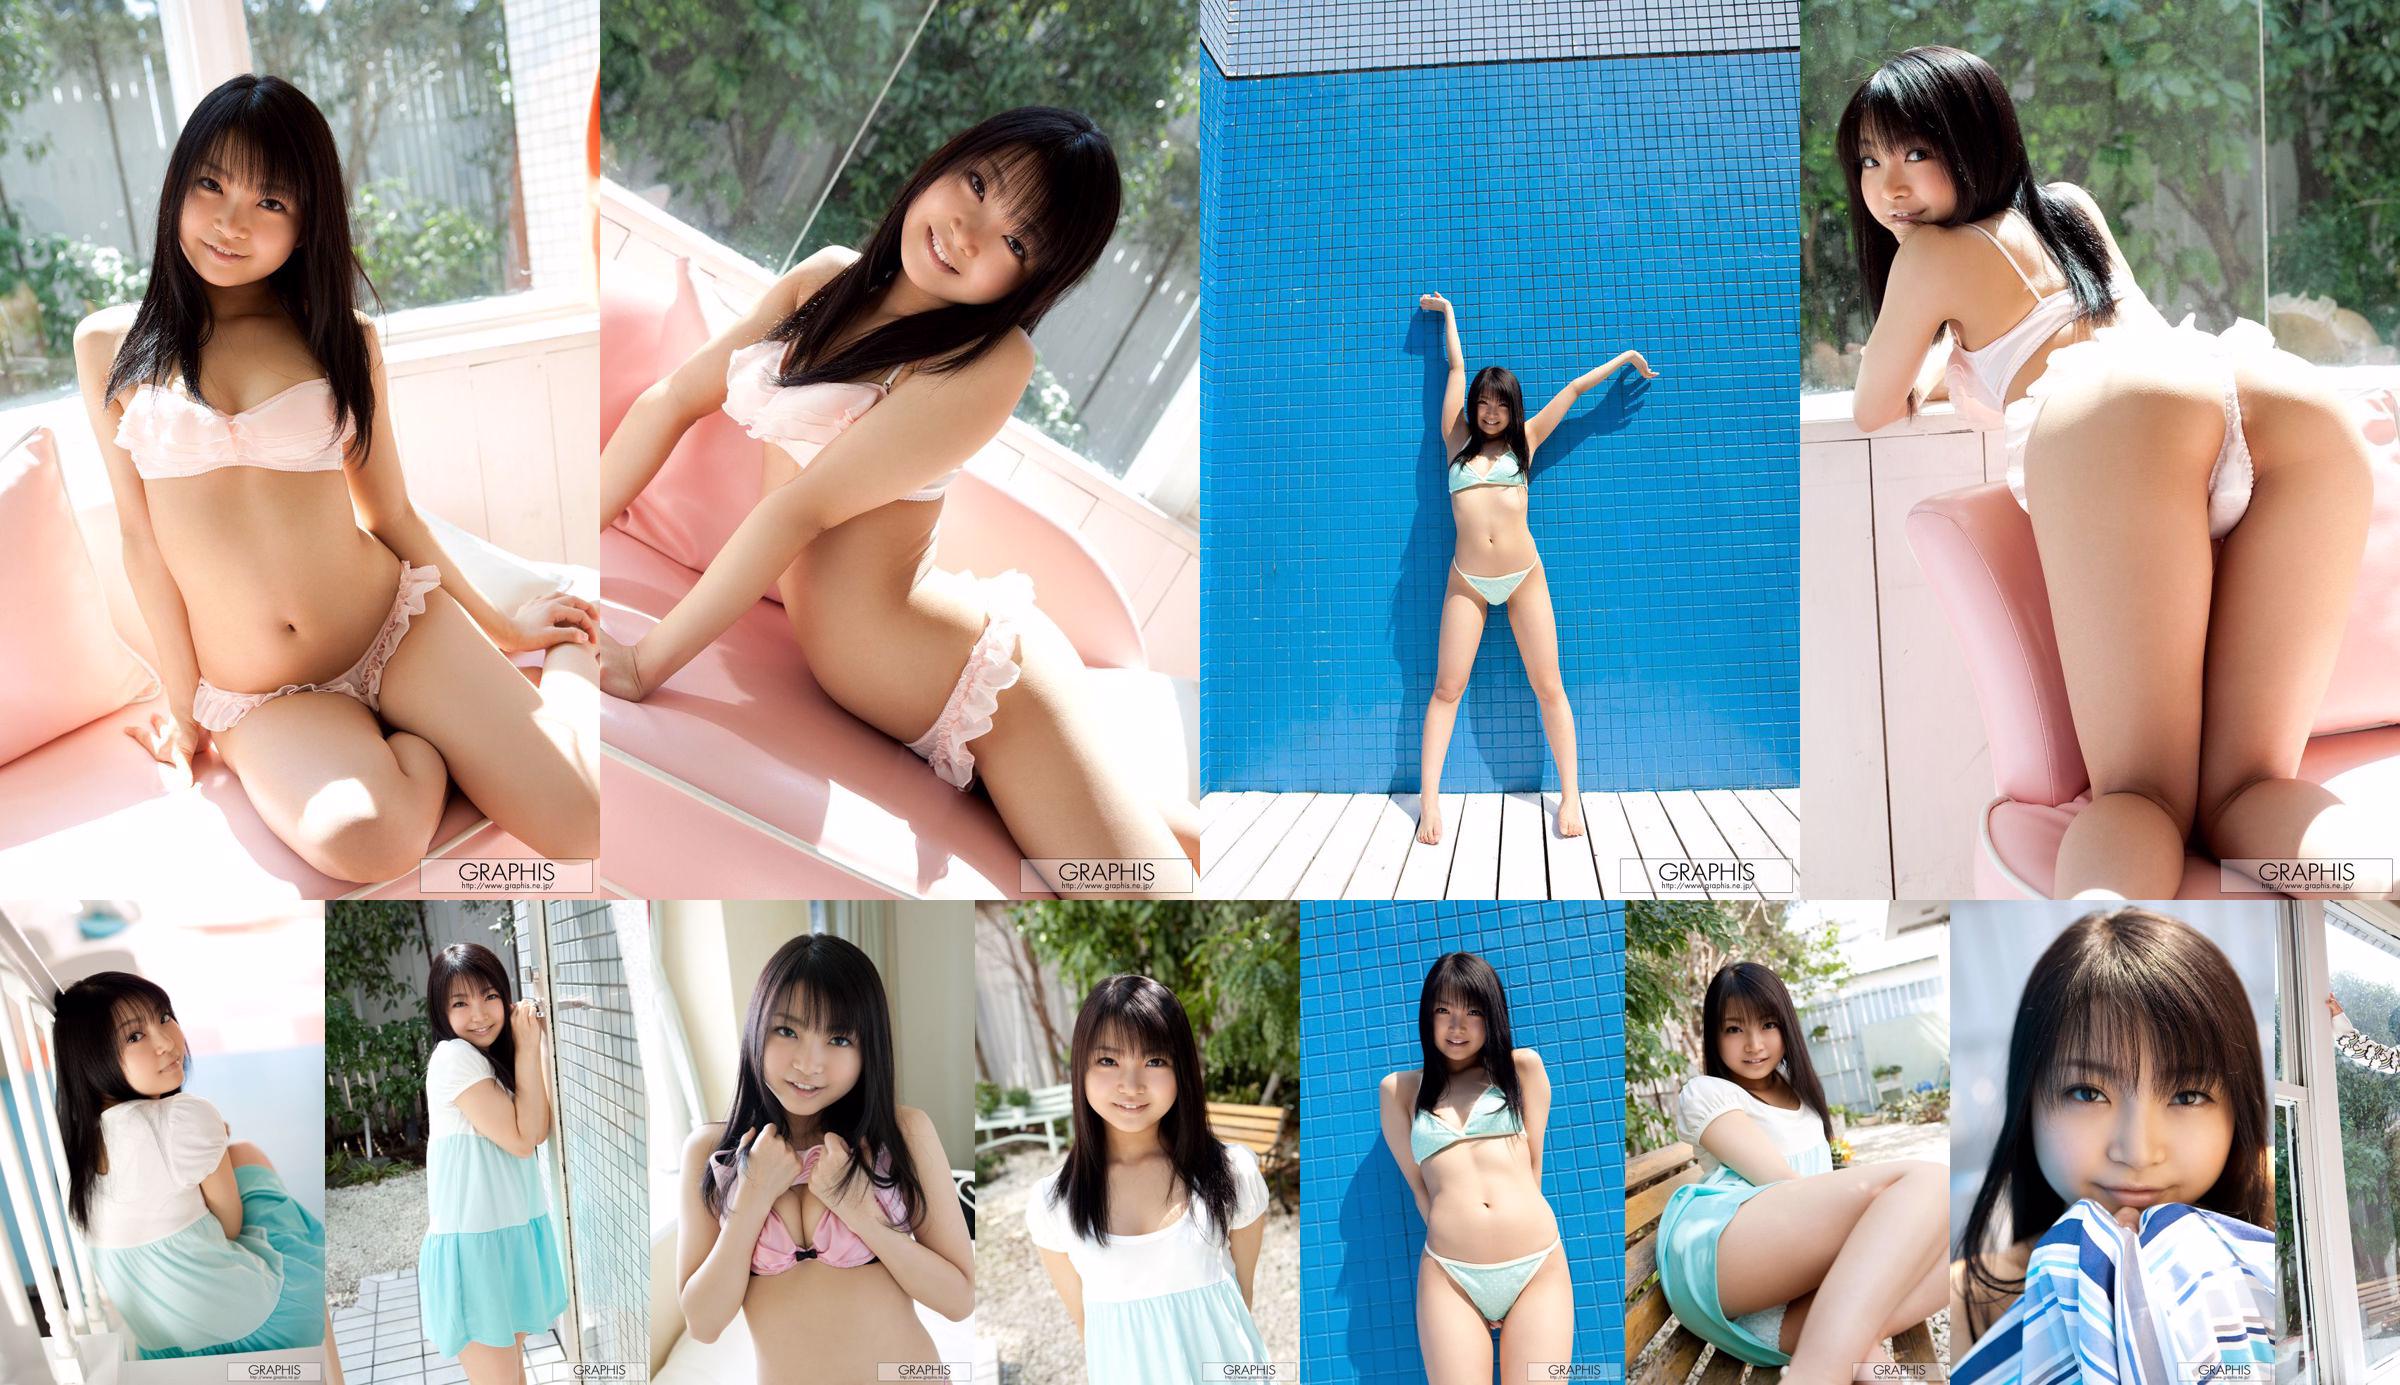 Chihiro Aoi / Chihiro Aoi [Graphis] Primera fotograbado Primera hija No.b57a71 Página 6